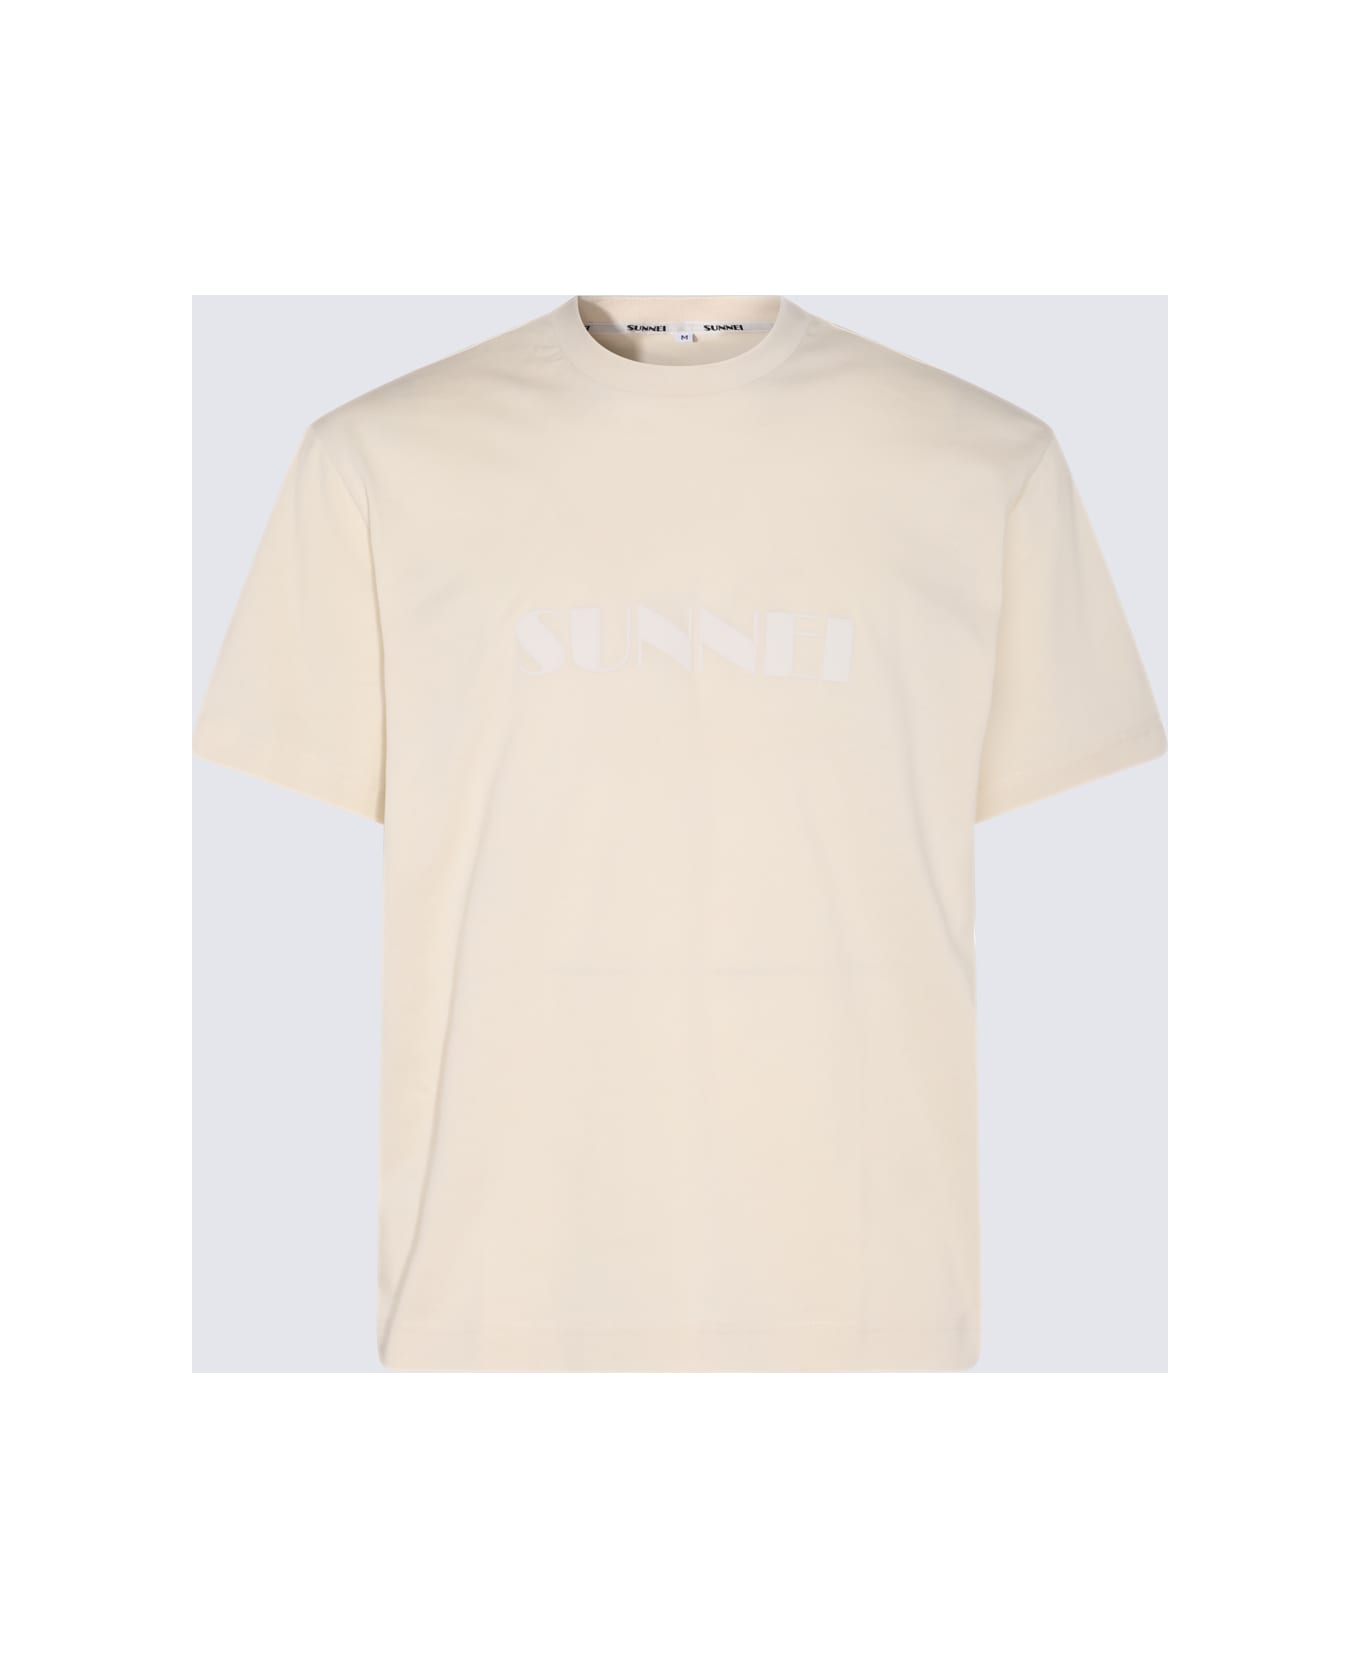 Sunnei Light Beige Cotton T-shirt - Beige シャツ